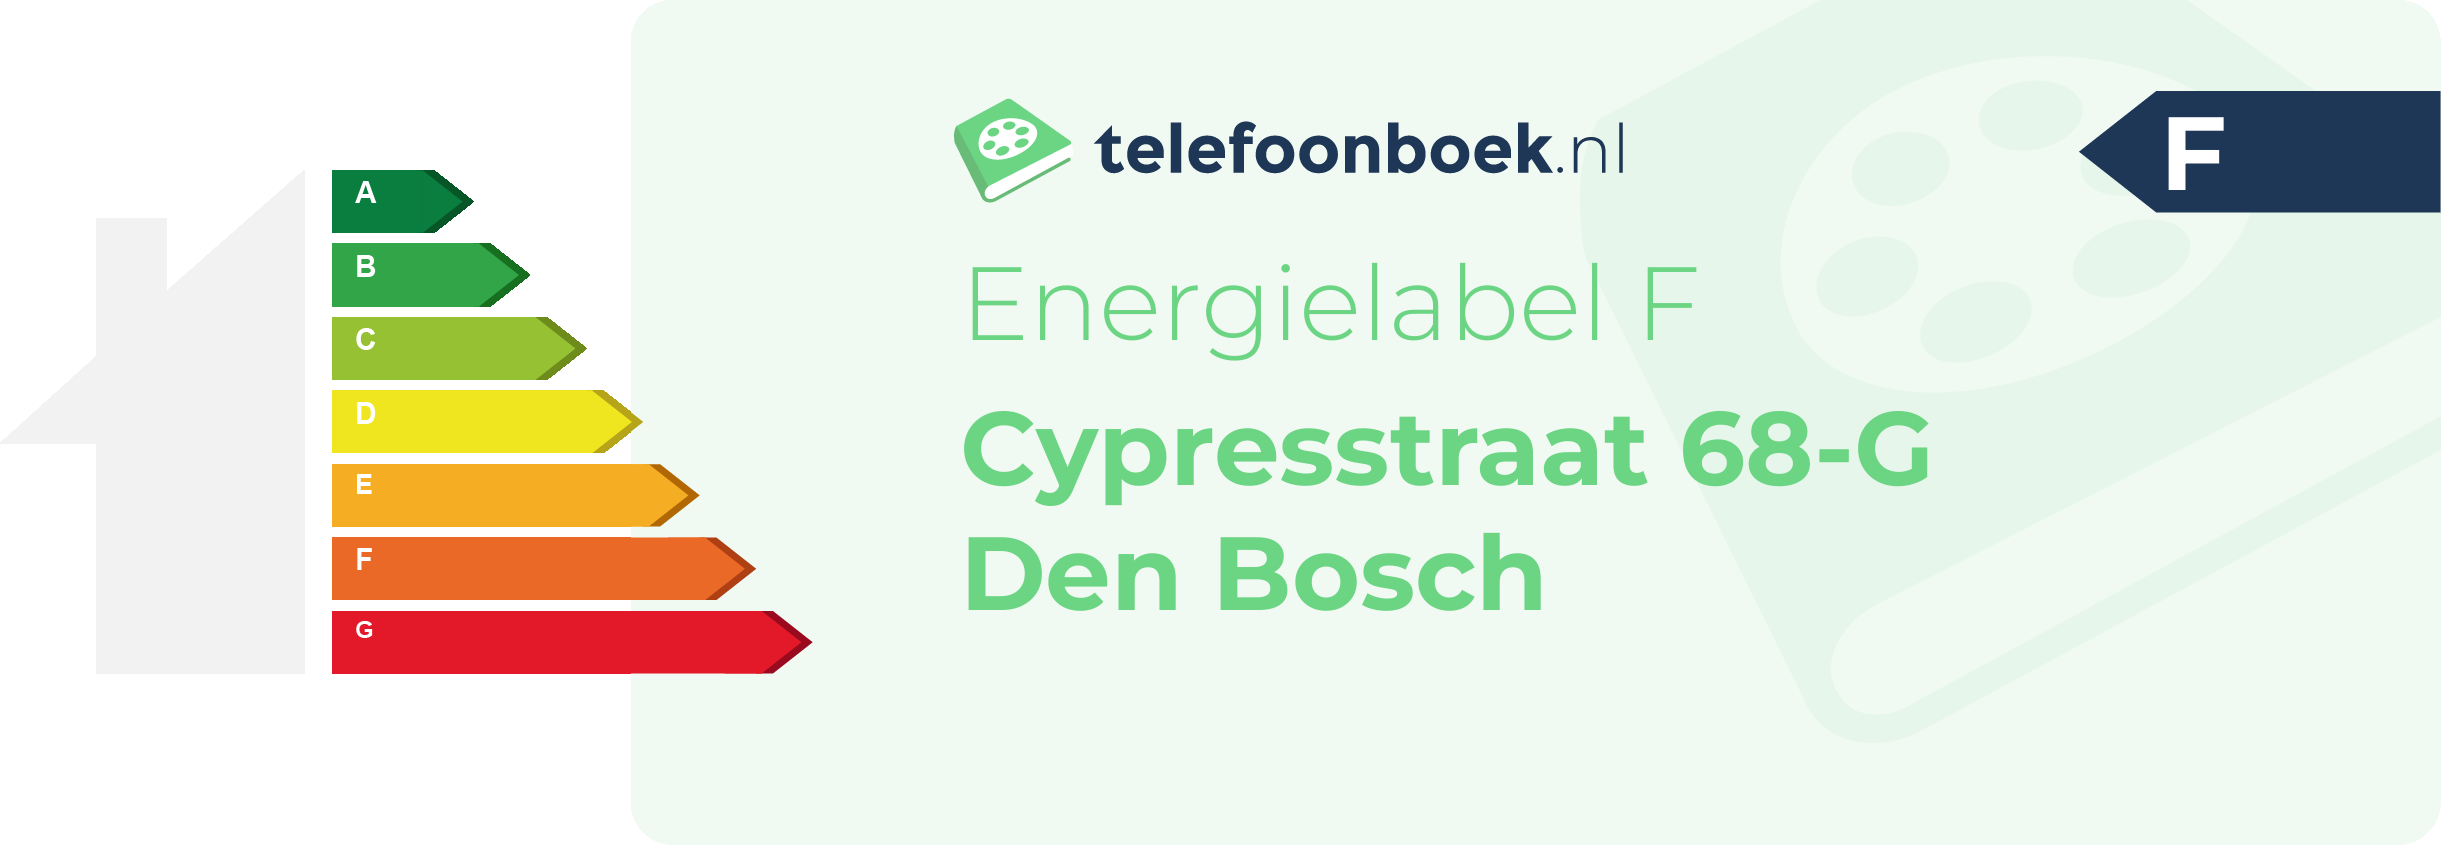 Energielabel Cypresstraat 68-G Den Bosch